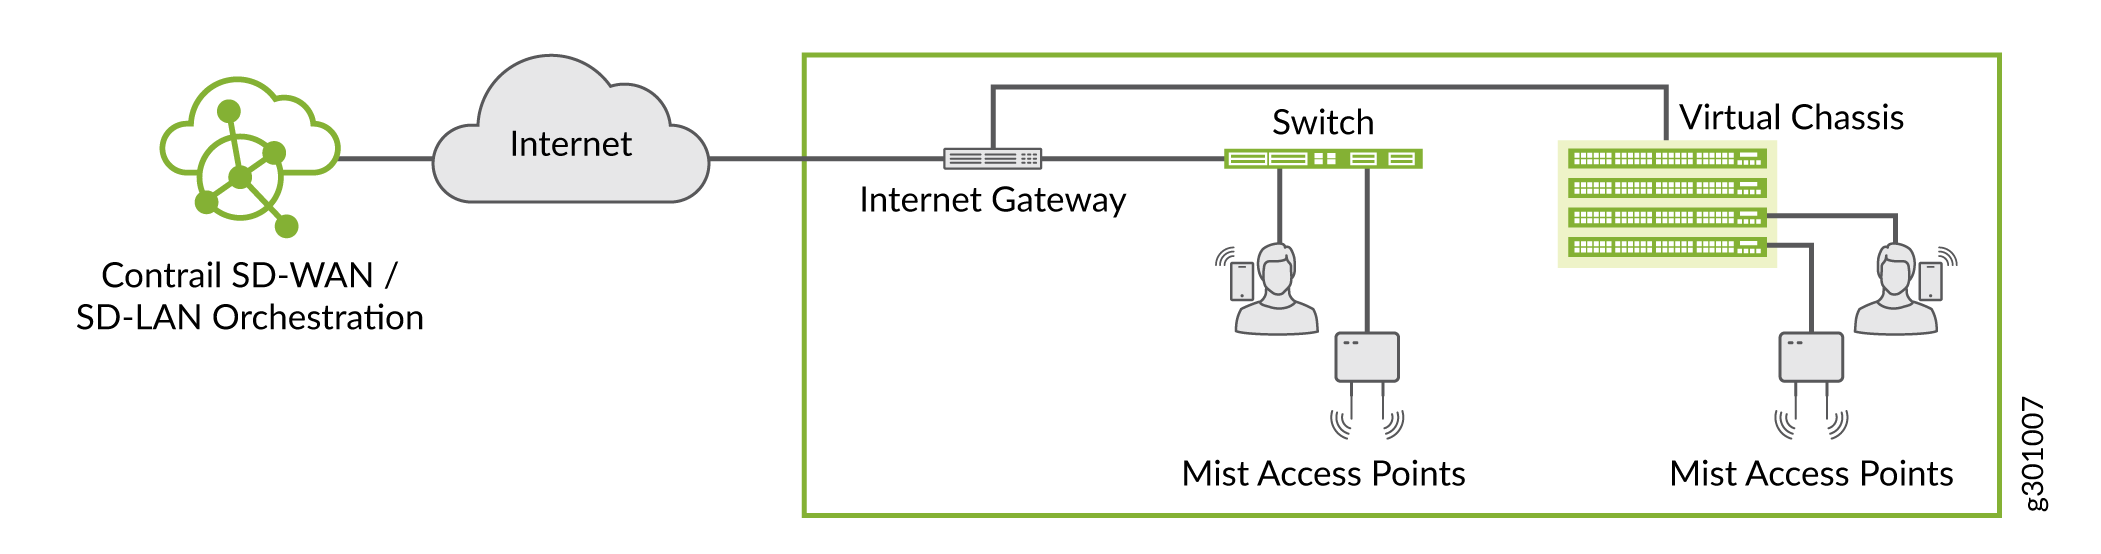 EX Behind an Internet
Gateway